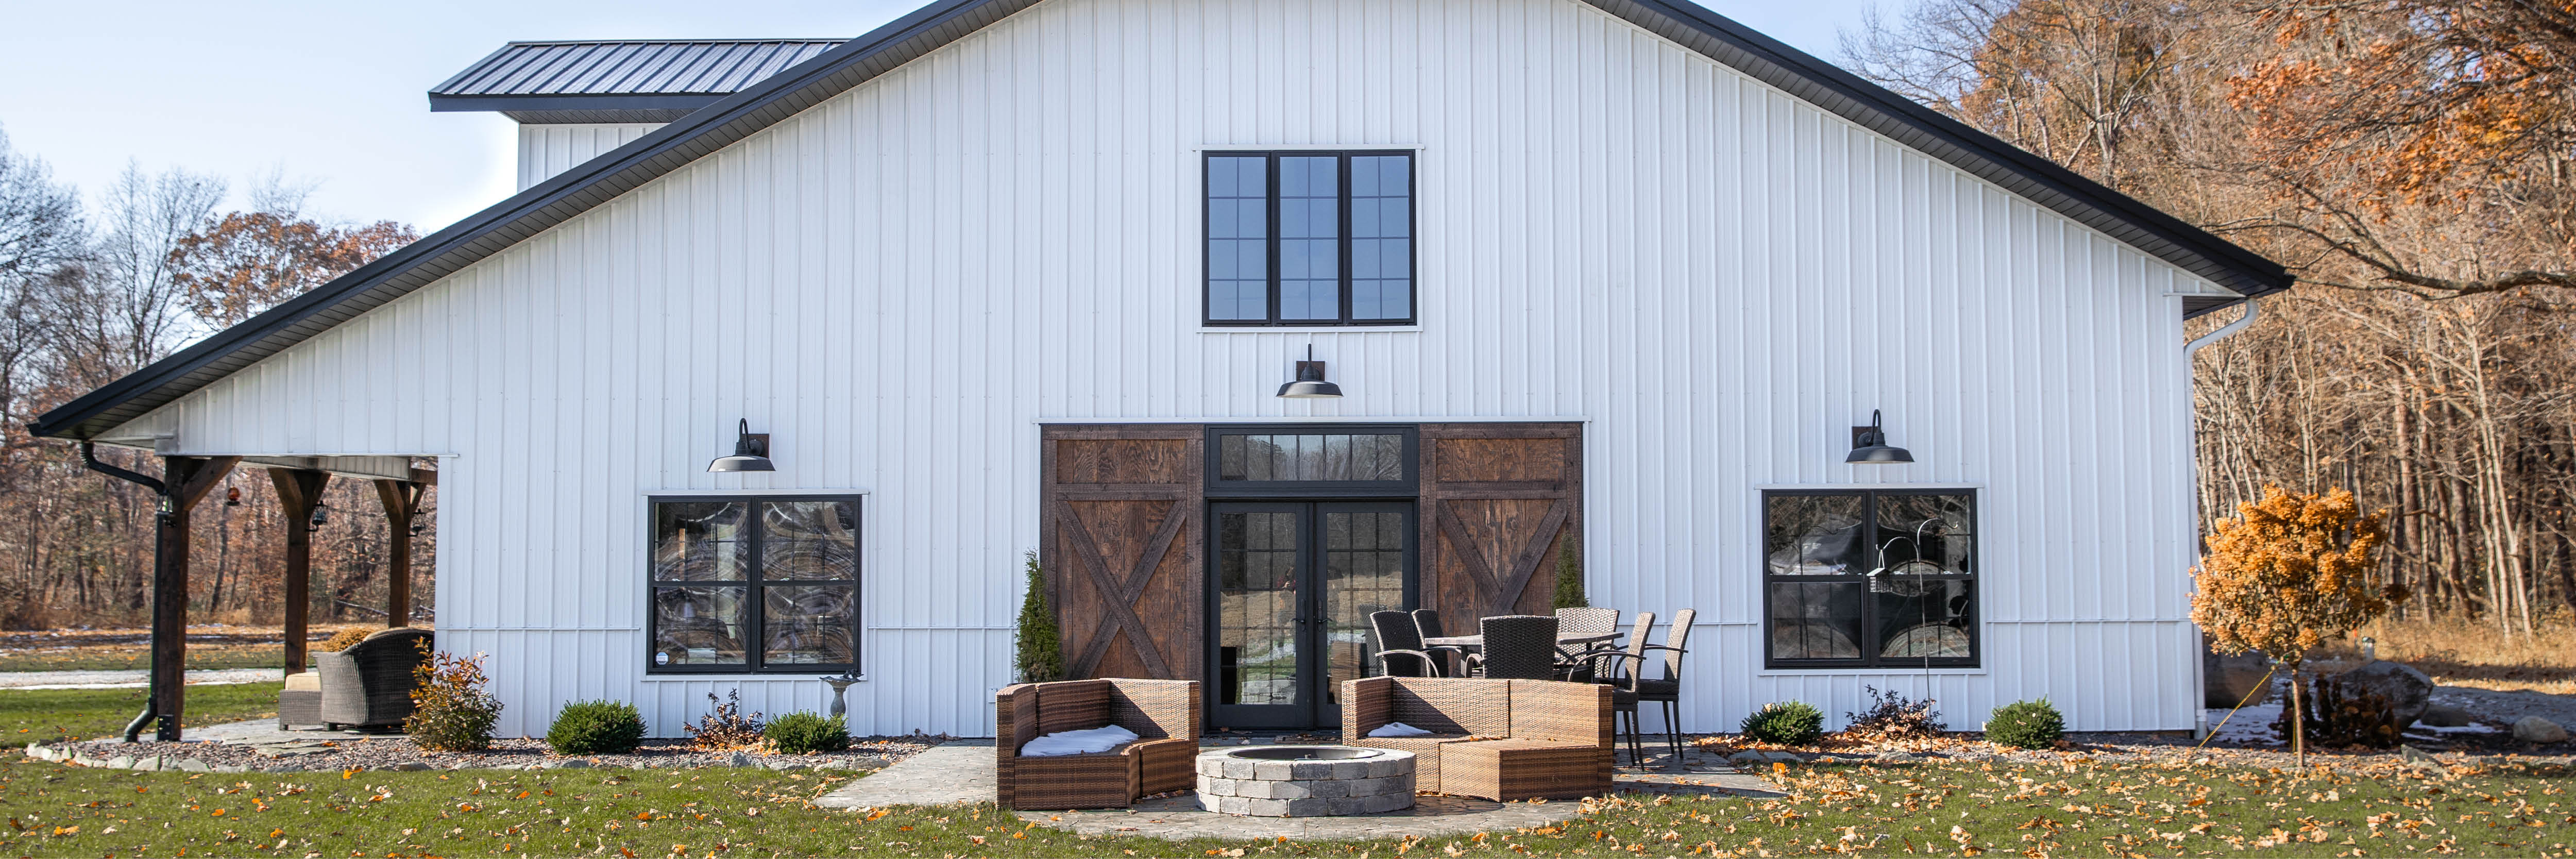 FBi Blog Who Builds Pole Barn Homes In Iowa 